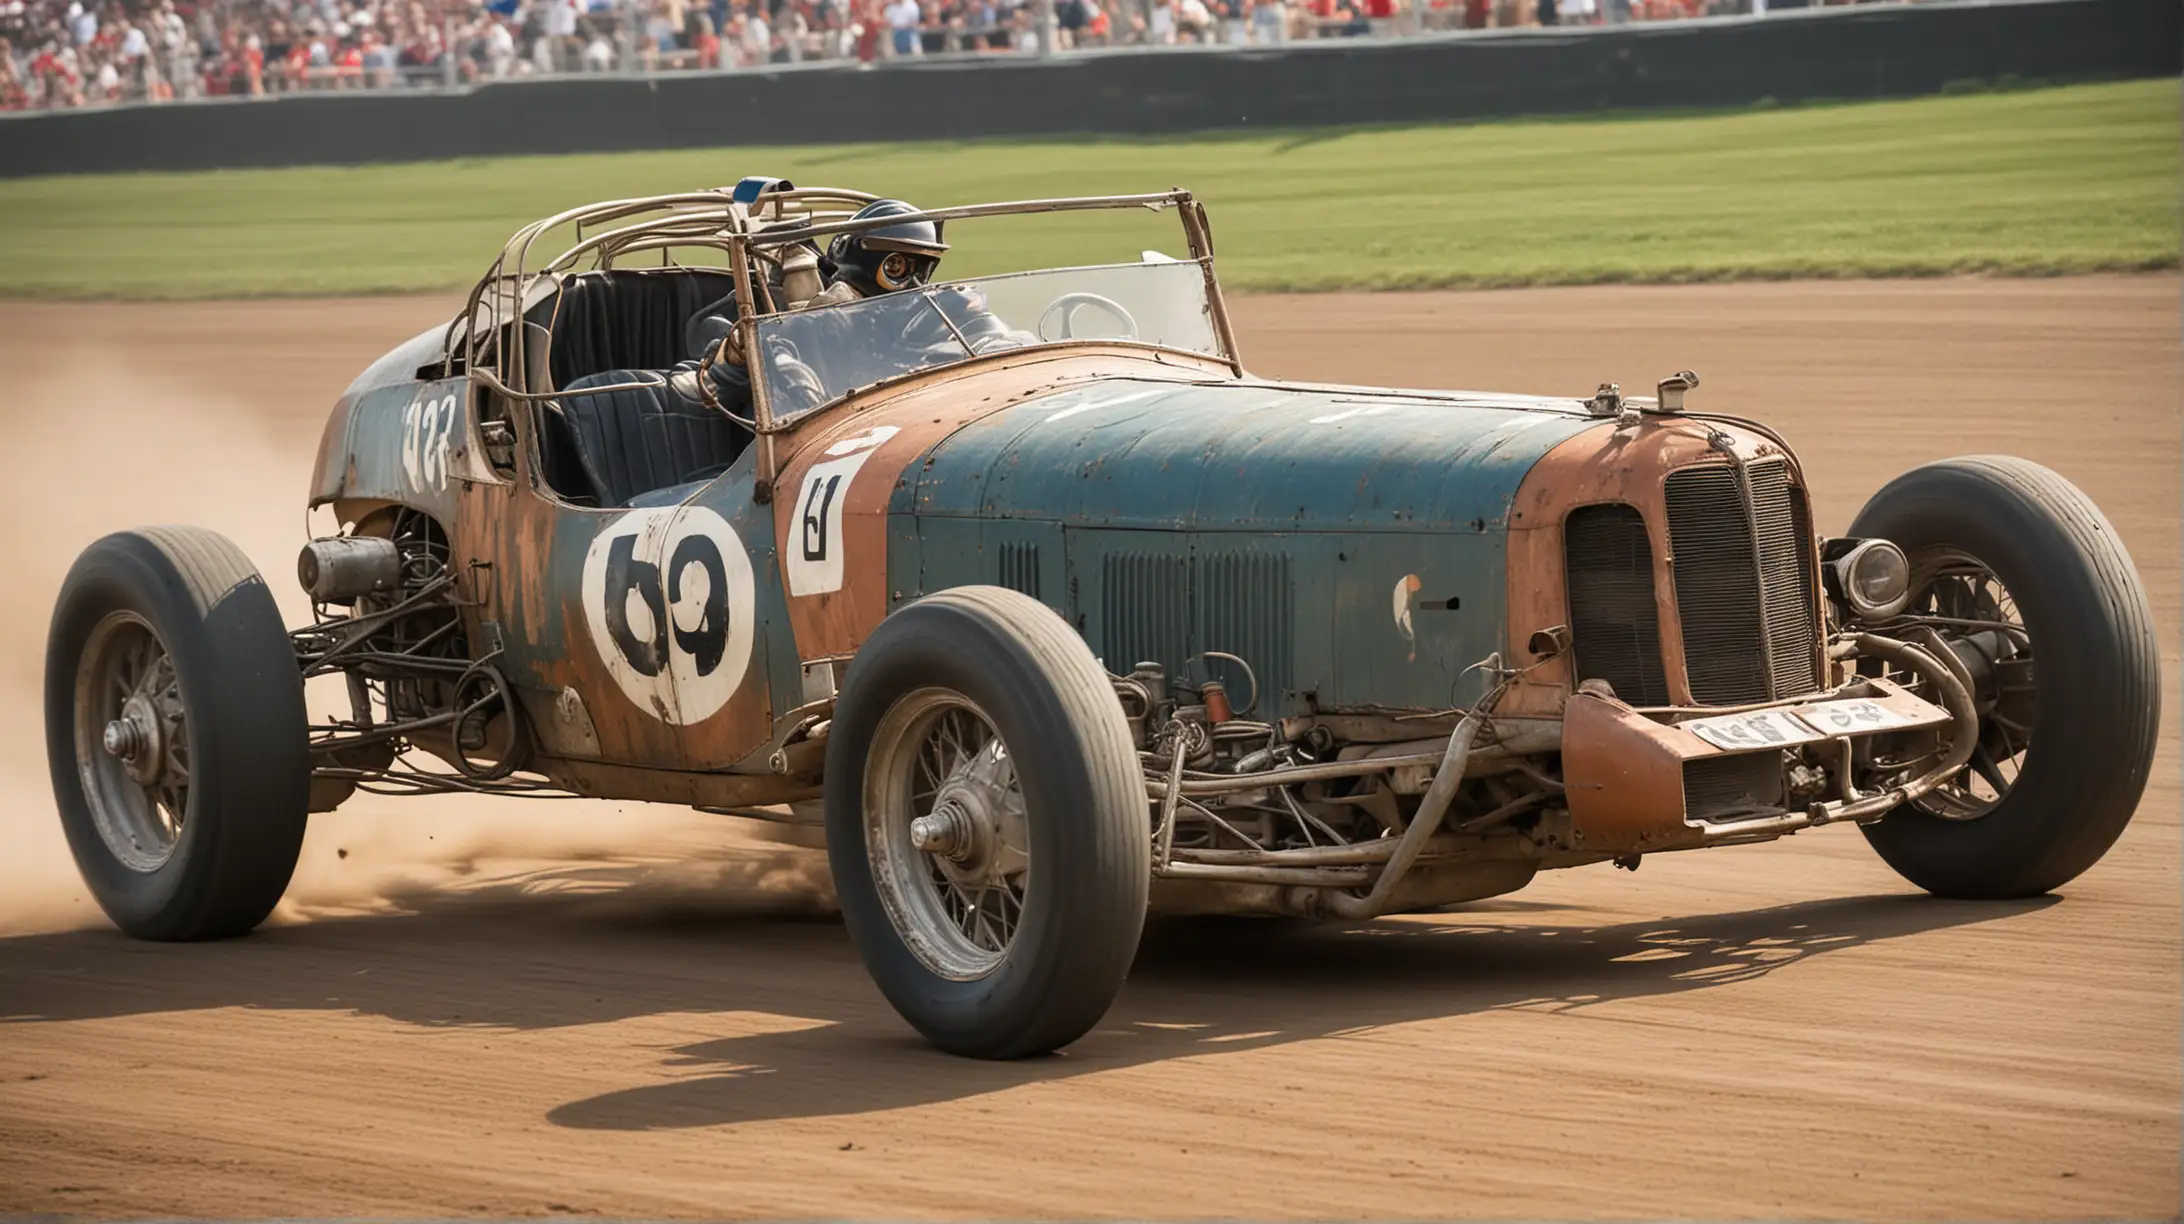 Vintage Speedway Race Car Roaring on Dusty Track